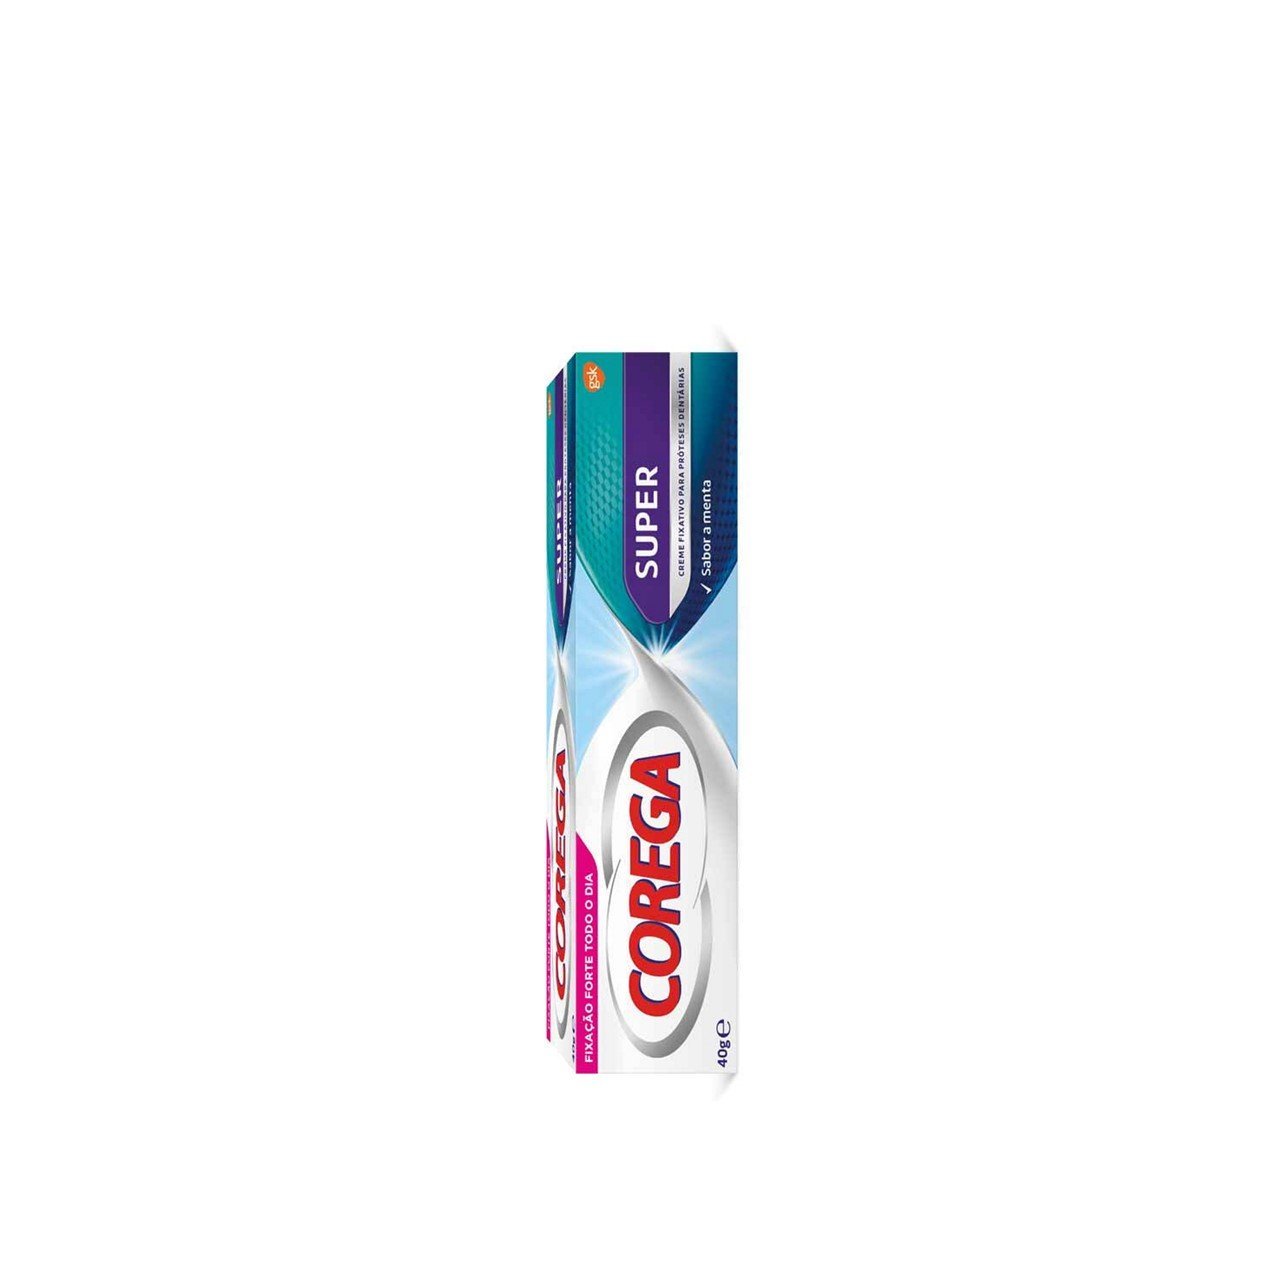 Corega Super Denture Fixation Cream Mint Flavour 40g (1.41 oz)